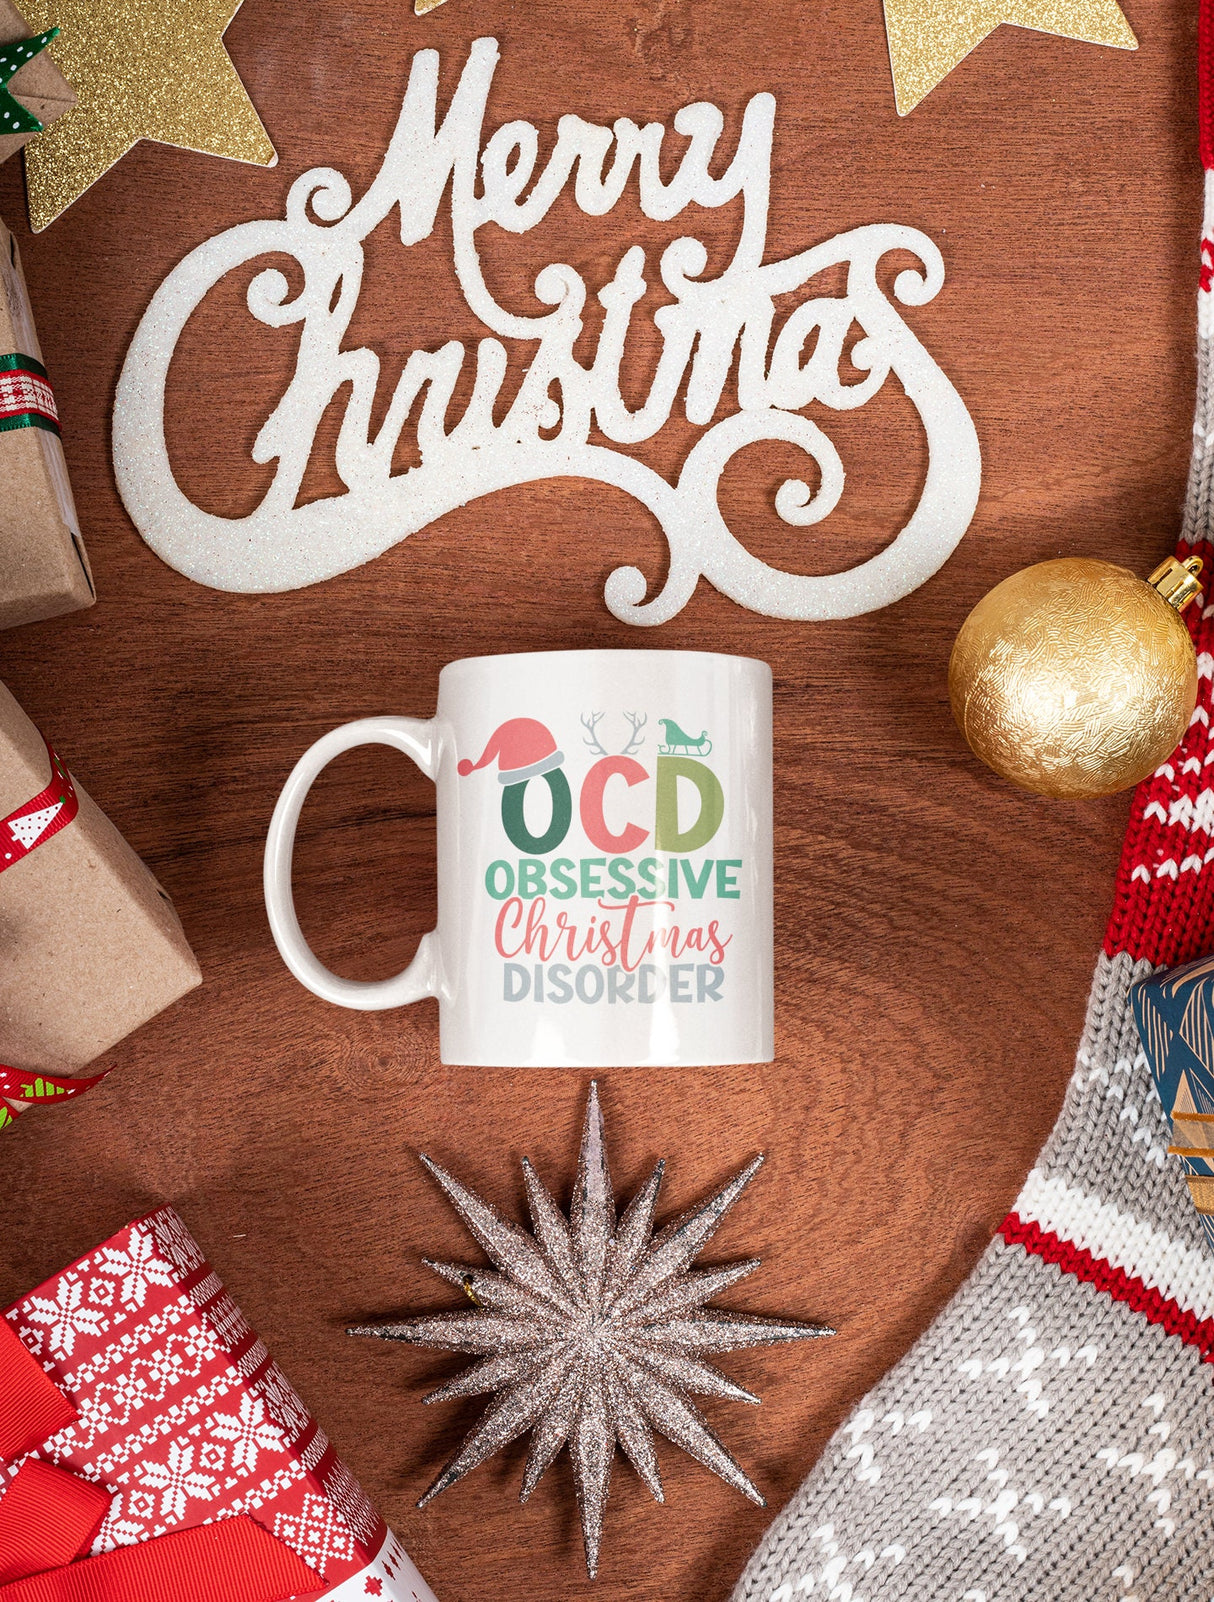 OCD Obsessive Christmas Disorder SVG Cut File